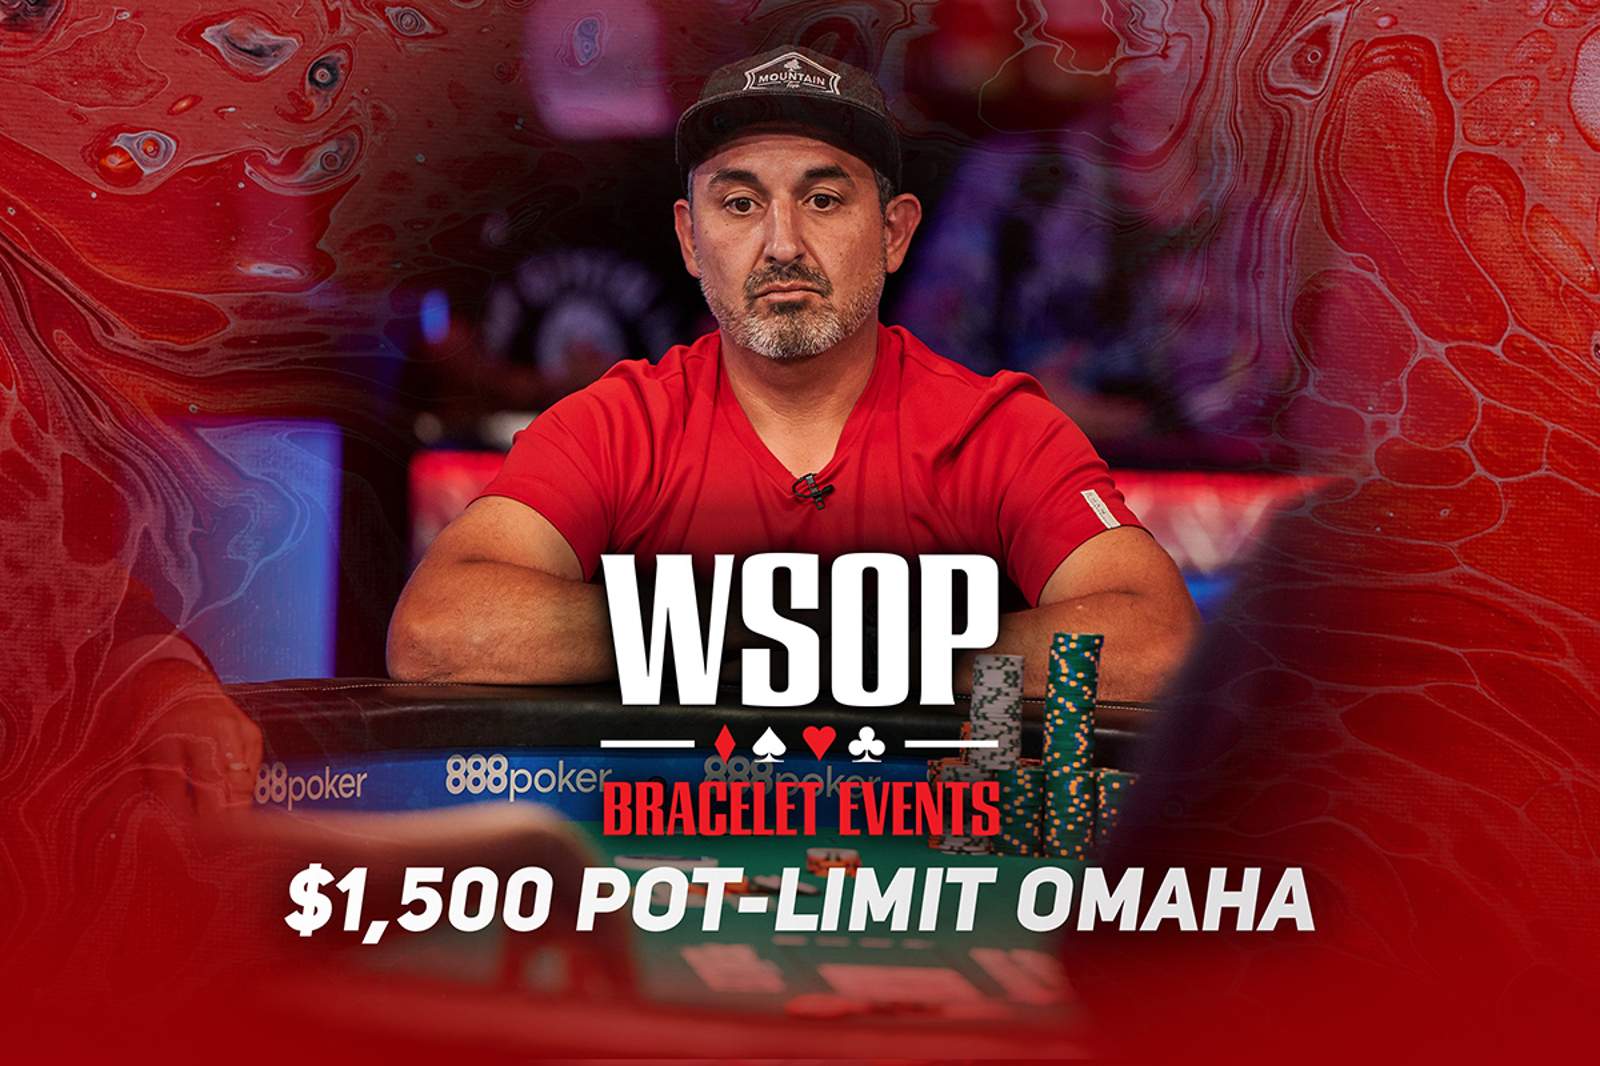 Watch the WSOP Event #39: $1.5K Pot-Limit Omaha Final Table on PokerGO.com at 8 p.m. ET